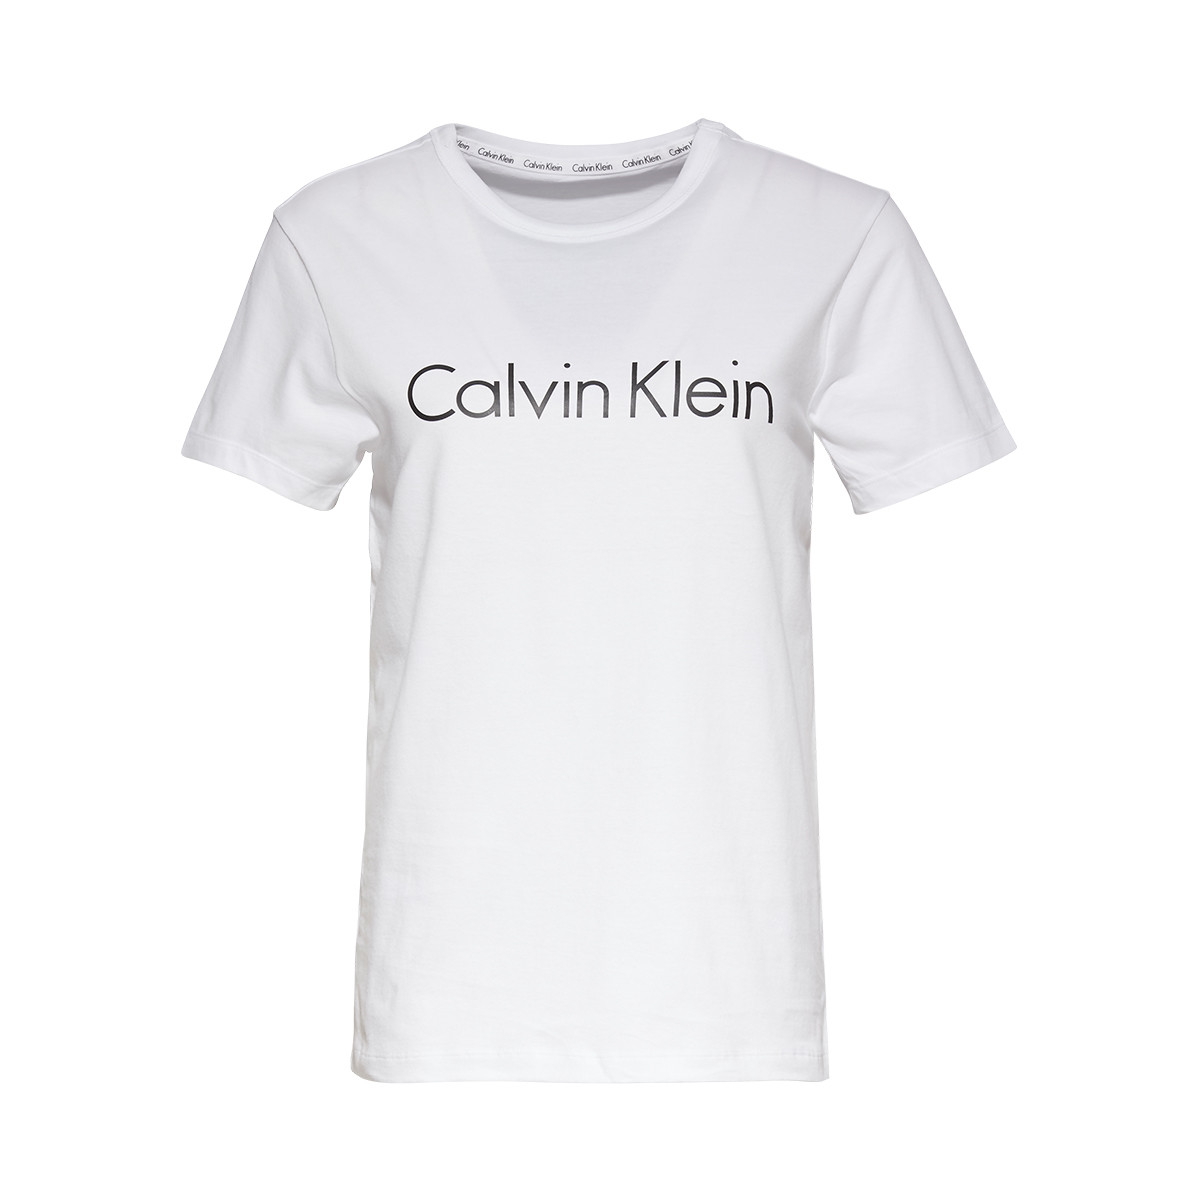 CALVIN KLEIN T-SHIRT S6105 100